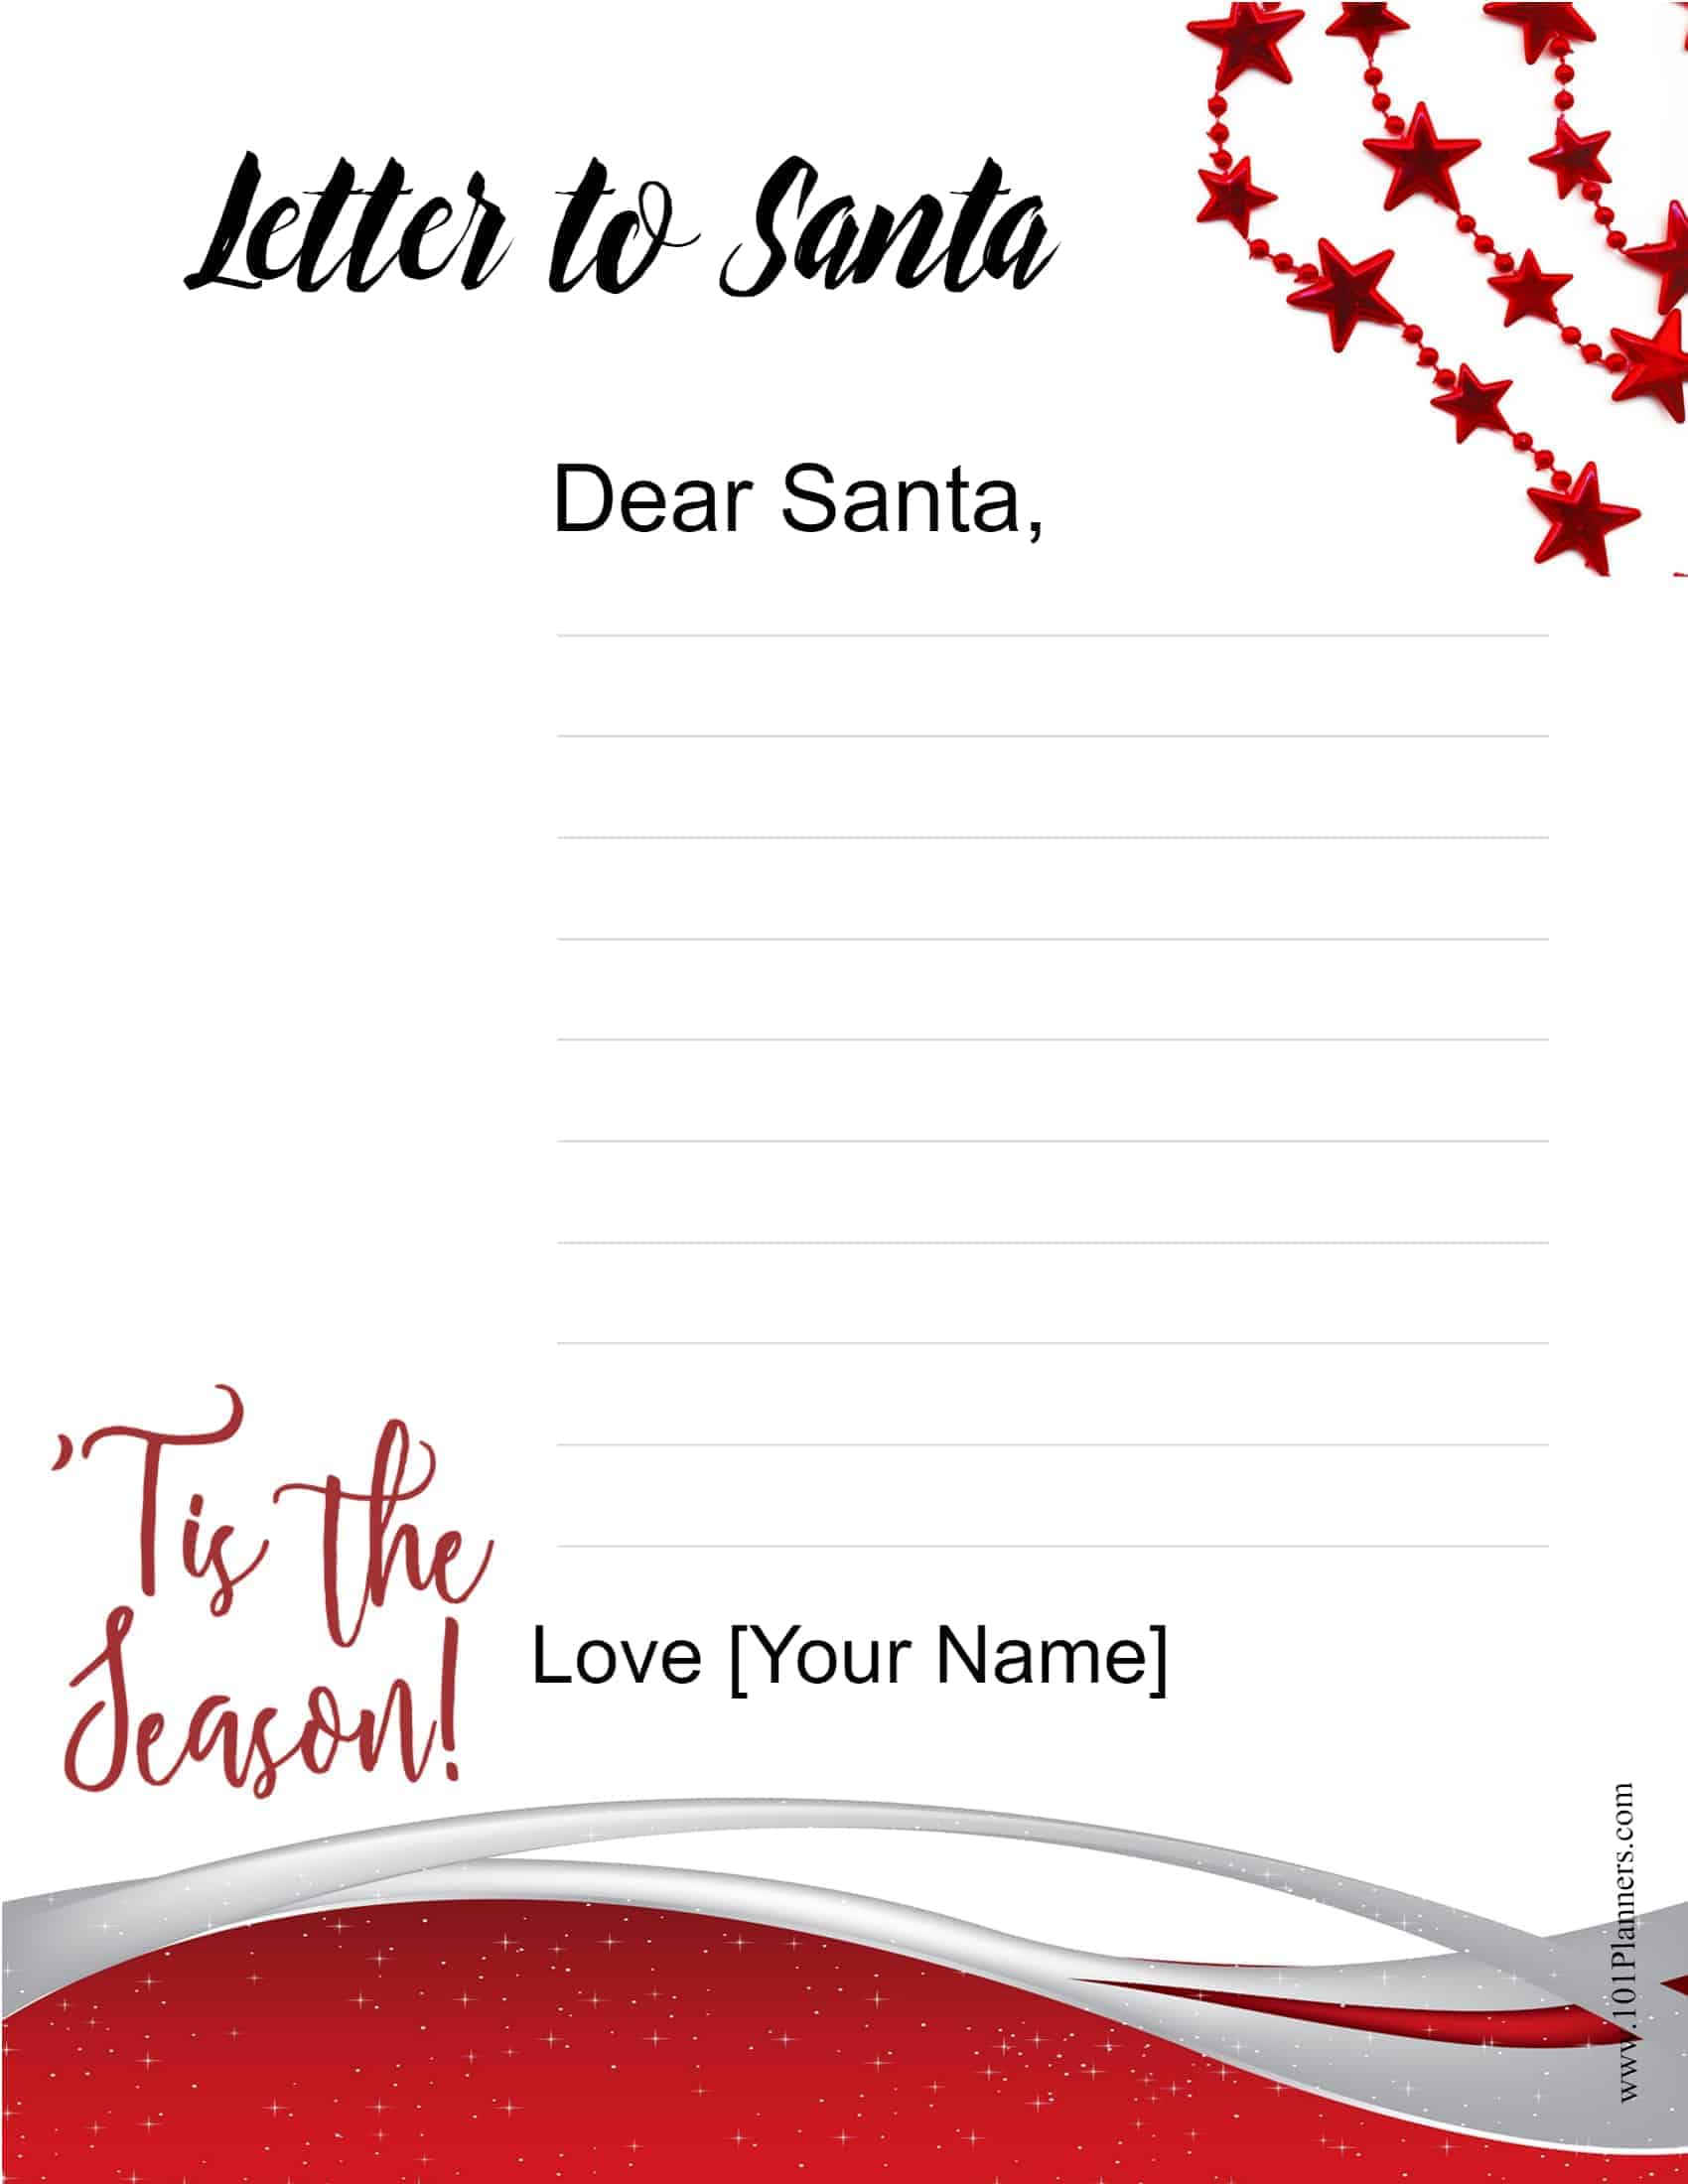 santa letter writing service